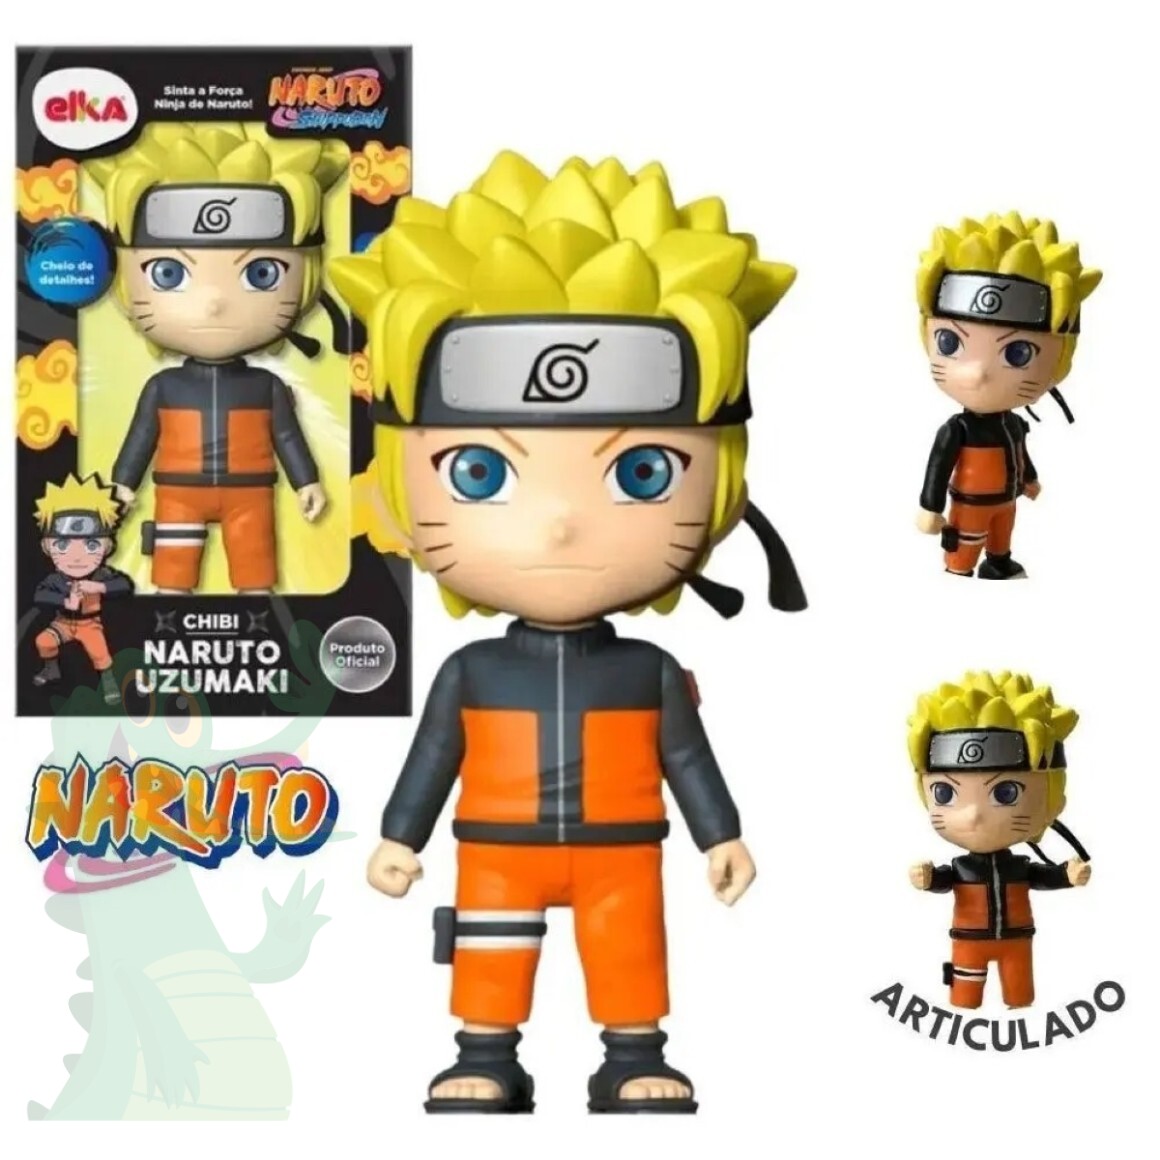 Boneco Naruto Uzumaki Chibi - Naruto Shippuden Mexe os Braços